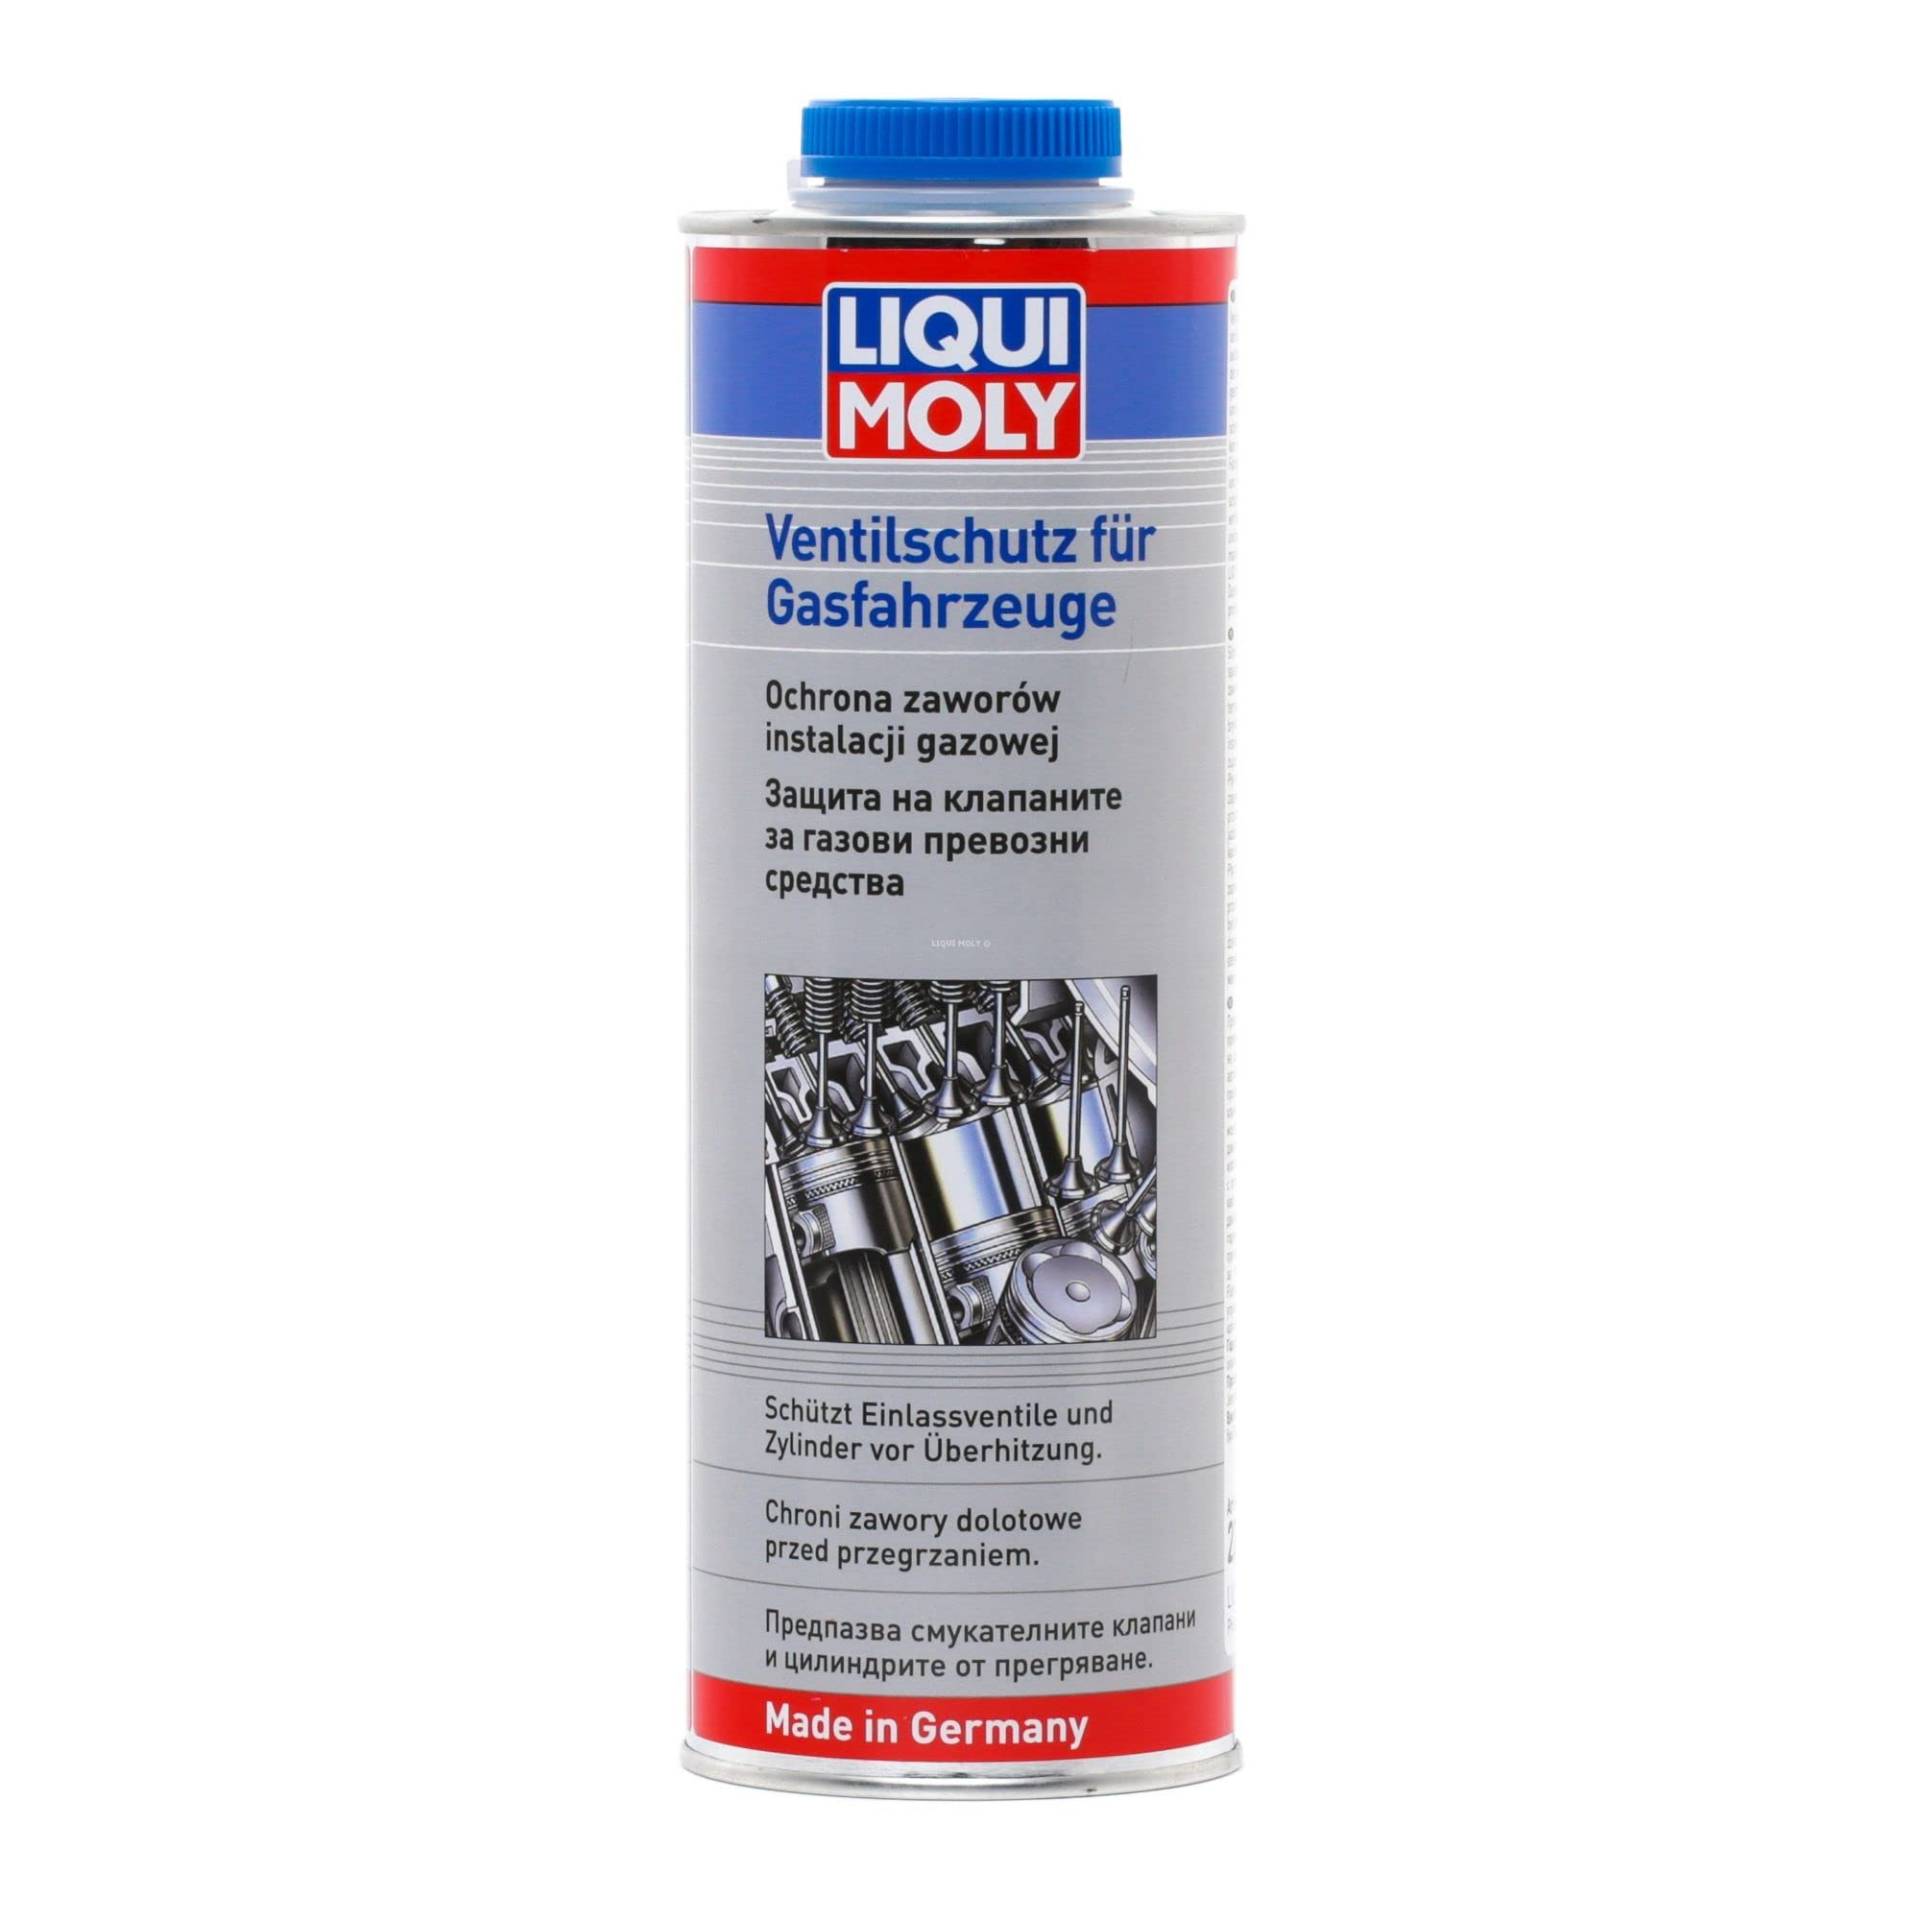 LIQUI MOLY Ventilschutz für Gasfahrzeuge | 1 L | Benzinadditiv | Art.-Nr.: 20451 von Liqui Moly